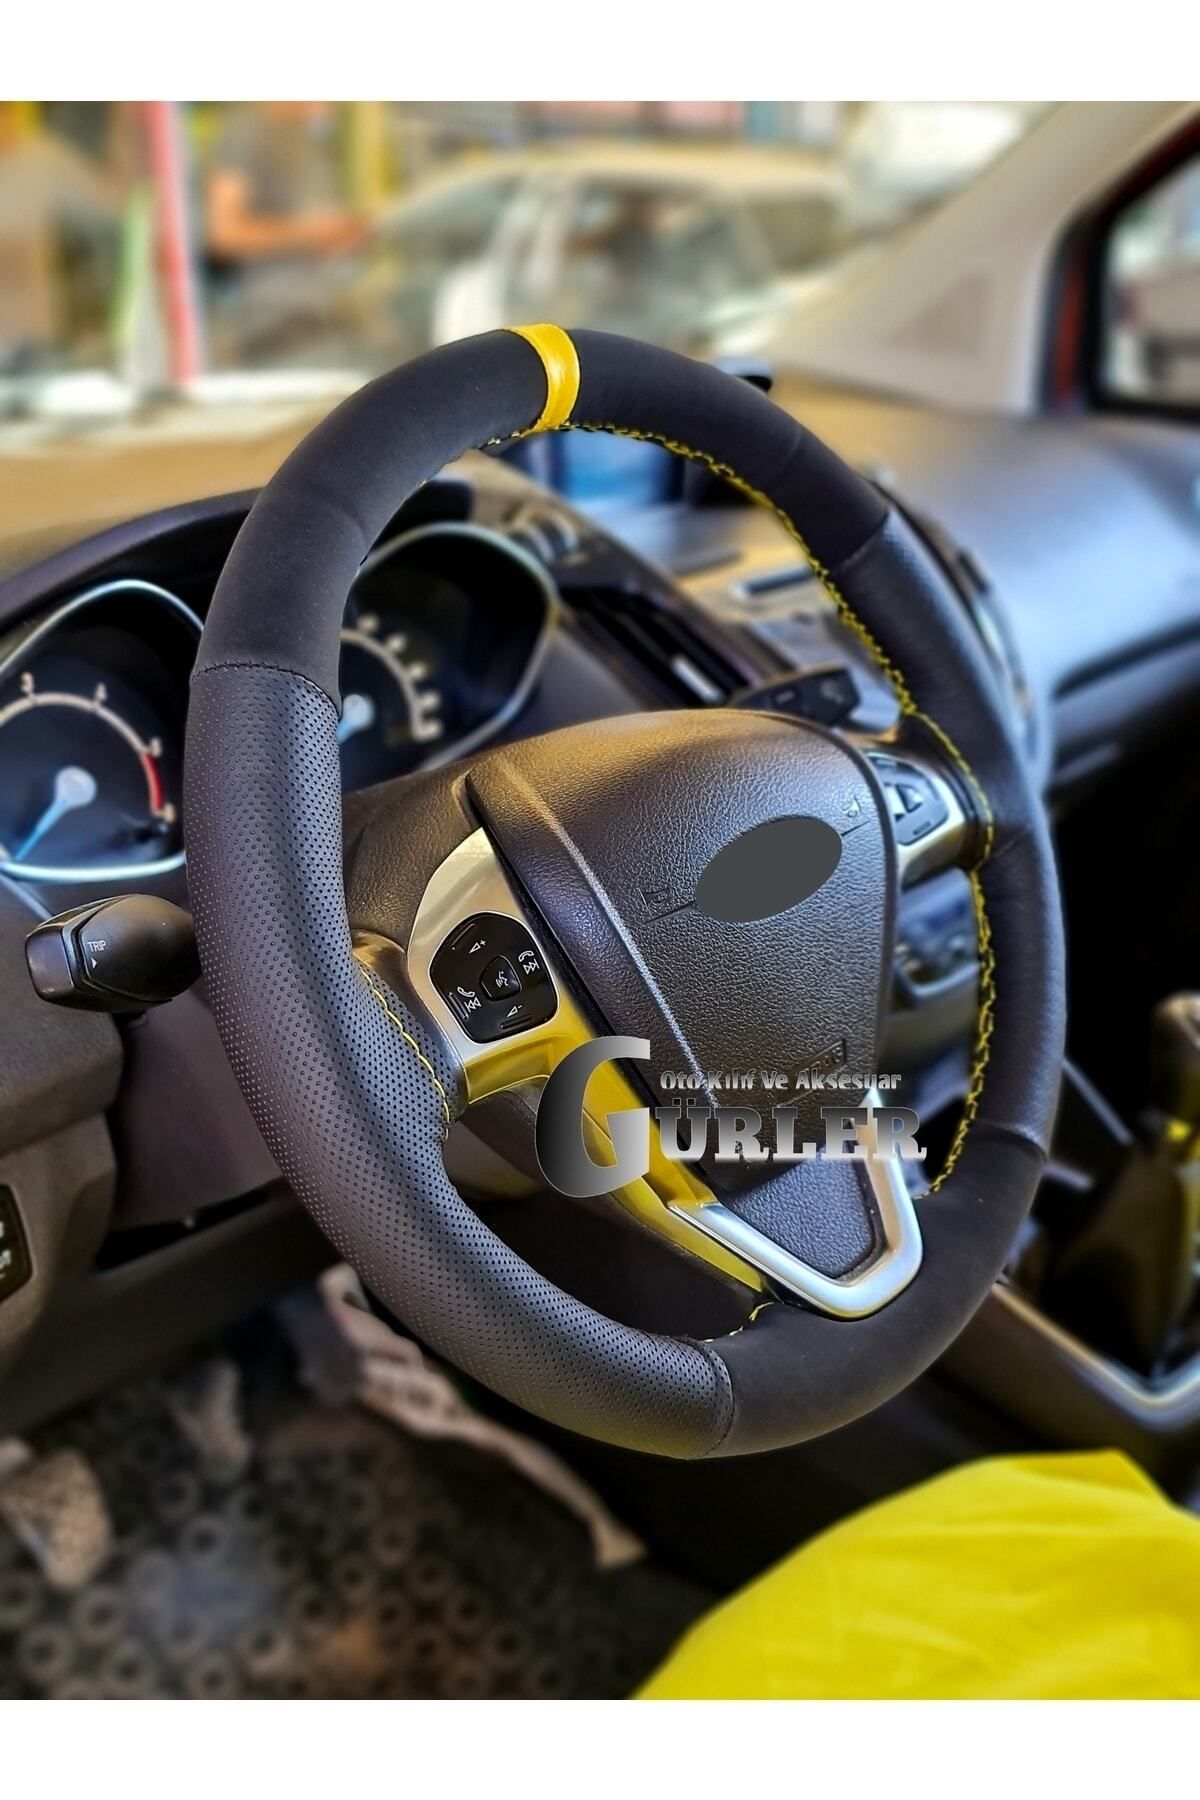 Asegaraj Universal Alcantara Steering Wheel Cover with Dotted